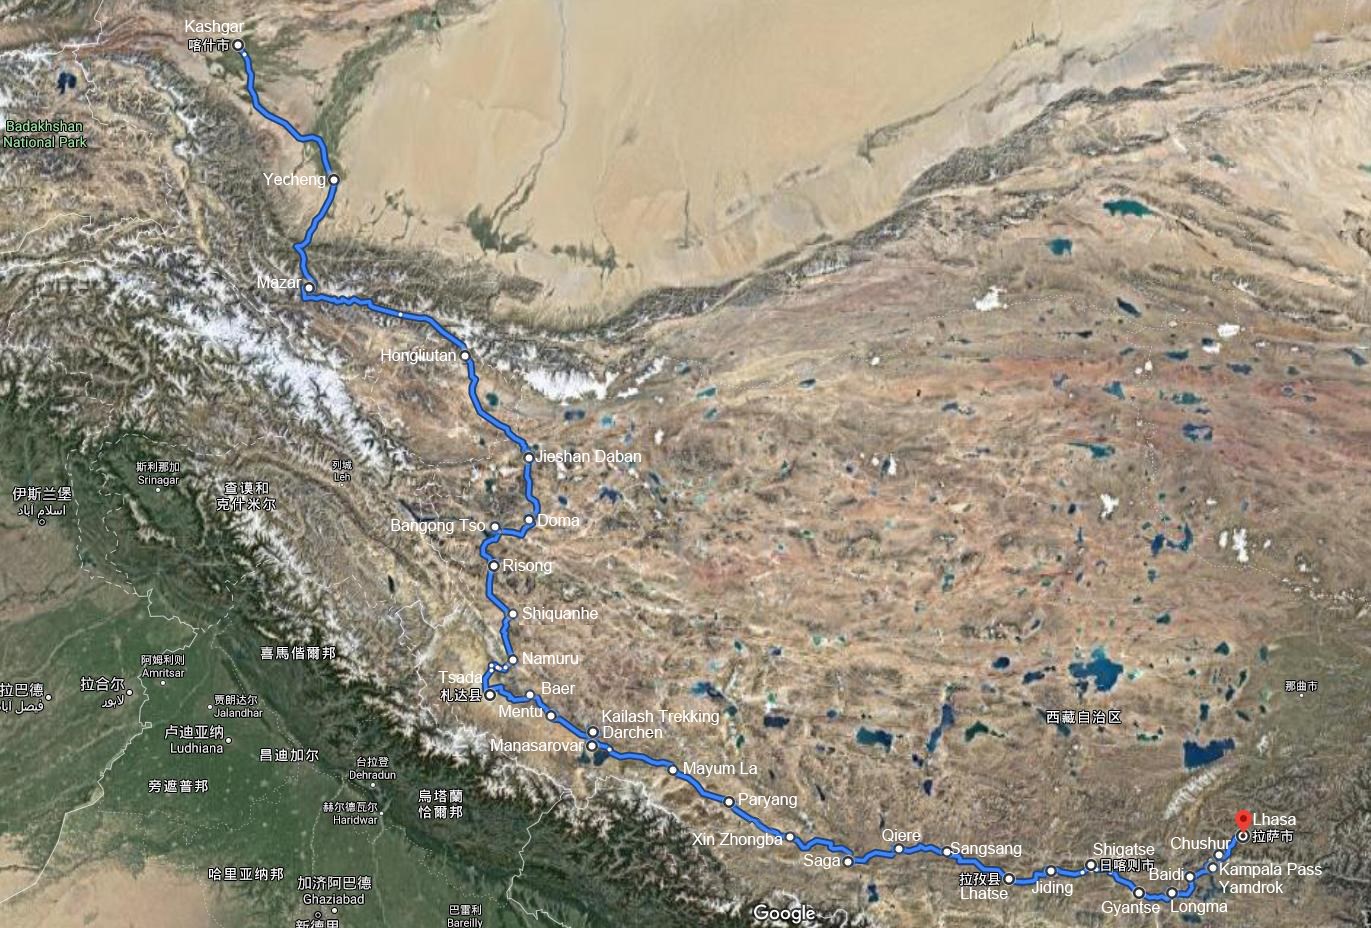 Grand Bike Tour from Xinjiang via Kailash to Tibet